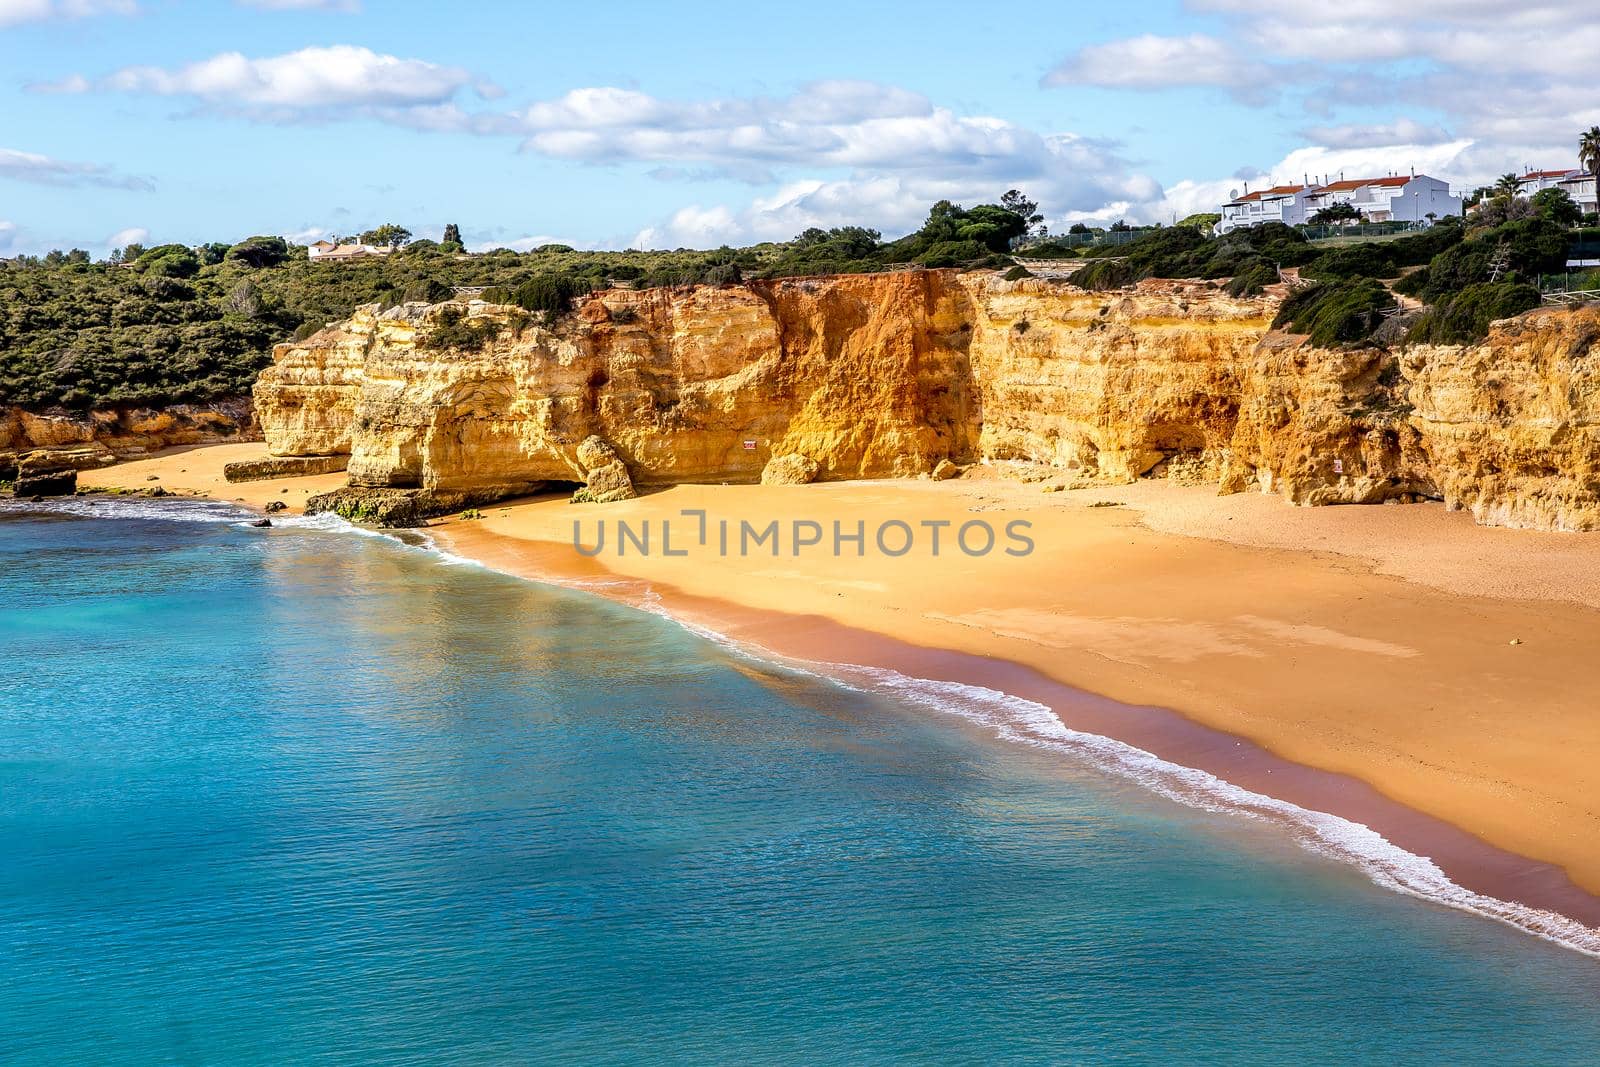 Senhora da rocha beach, Algarve, Portugal by photogolfer